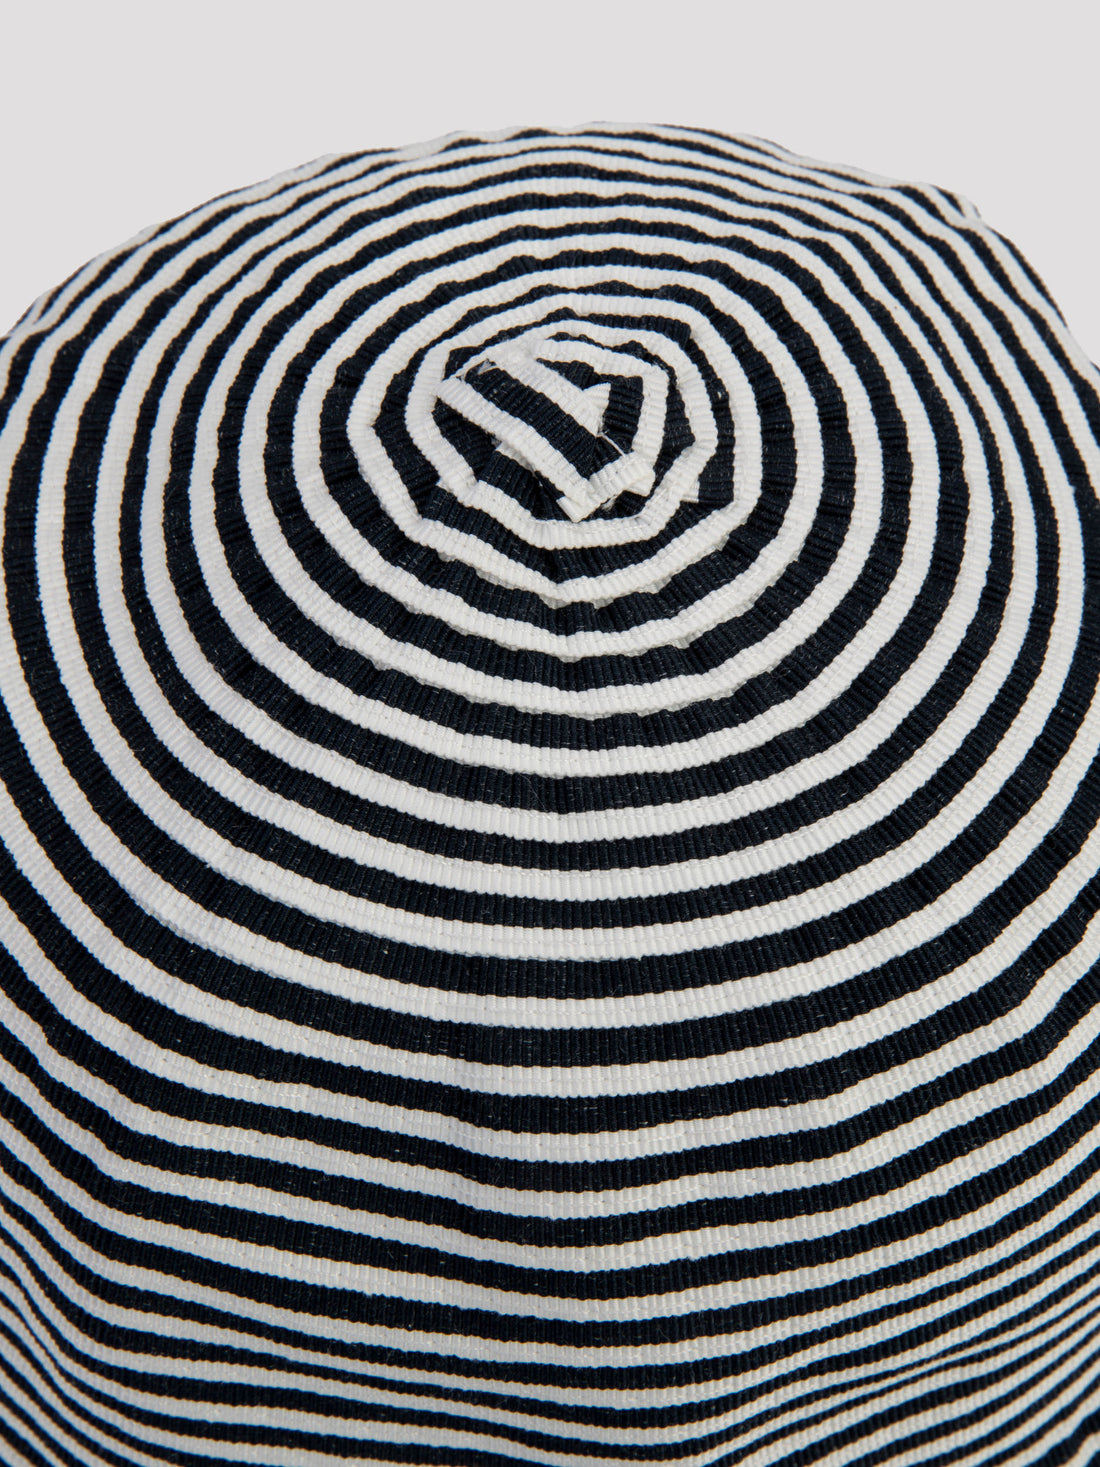 Striped cloche navy hat - Grevi